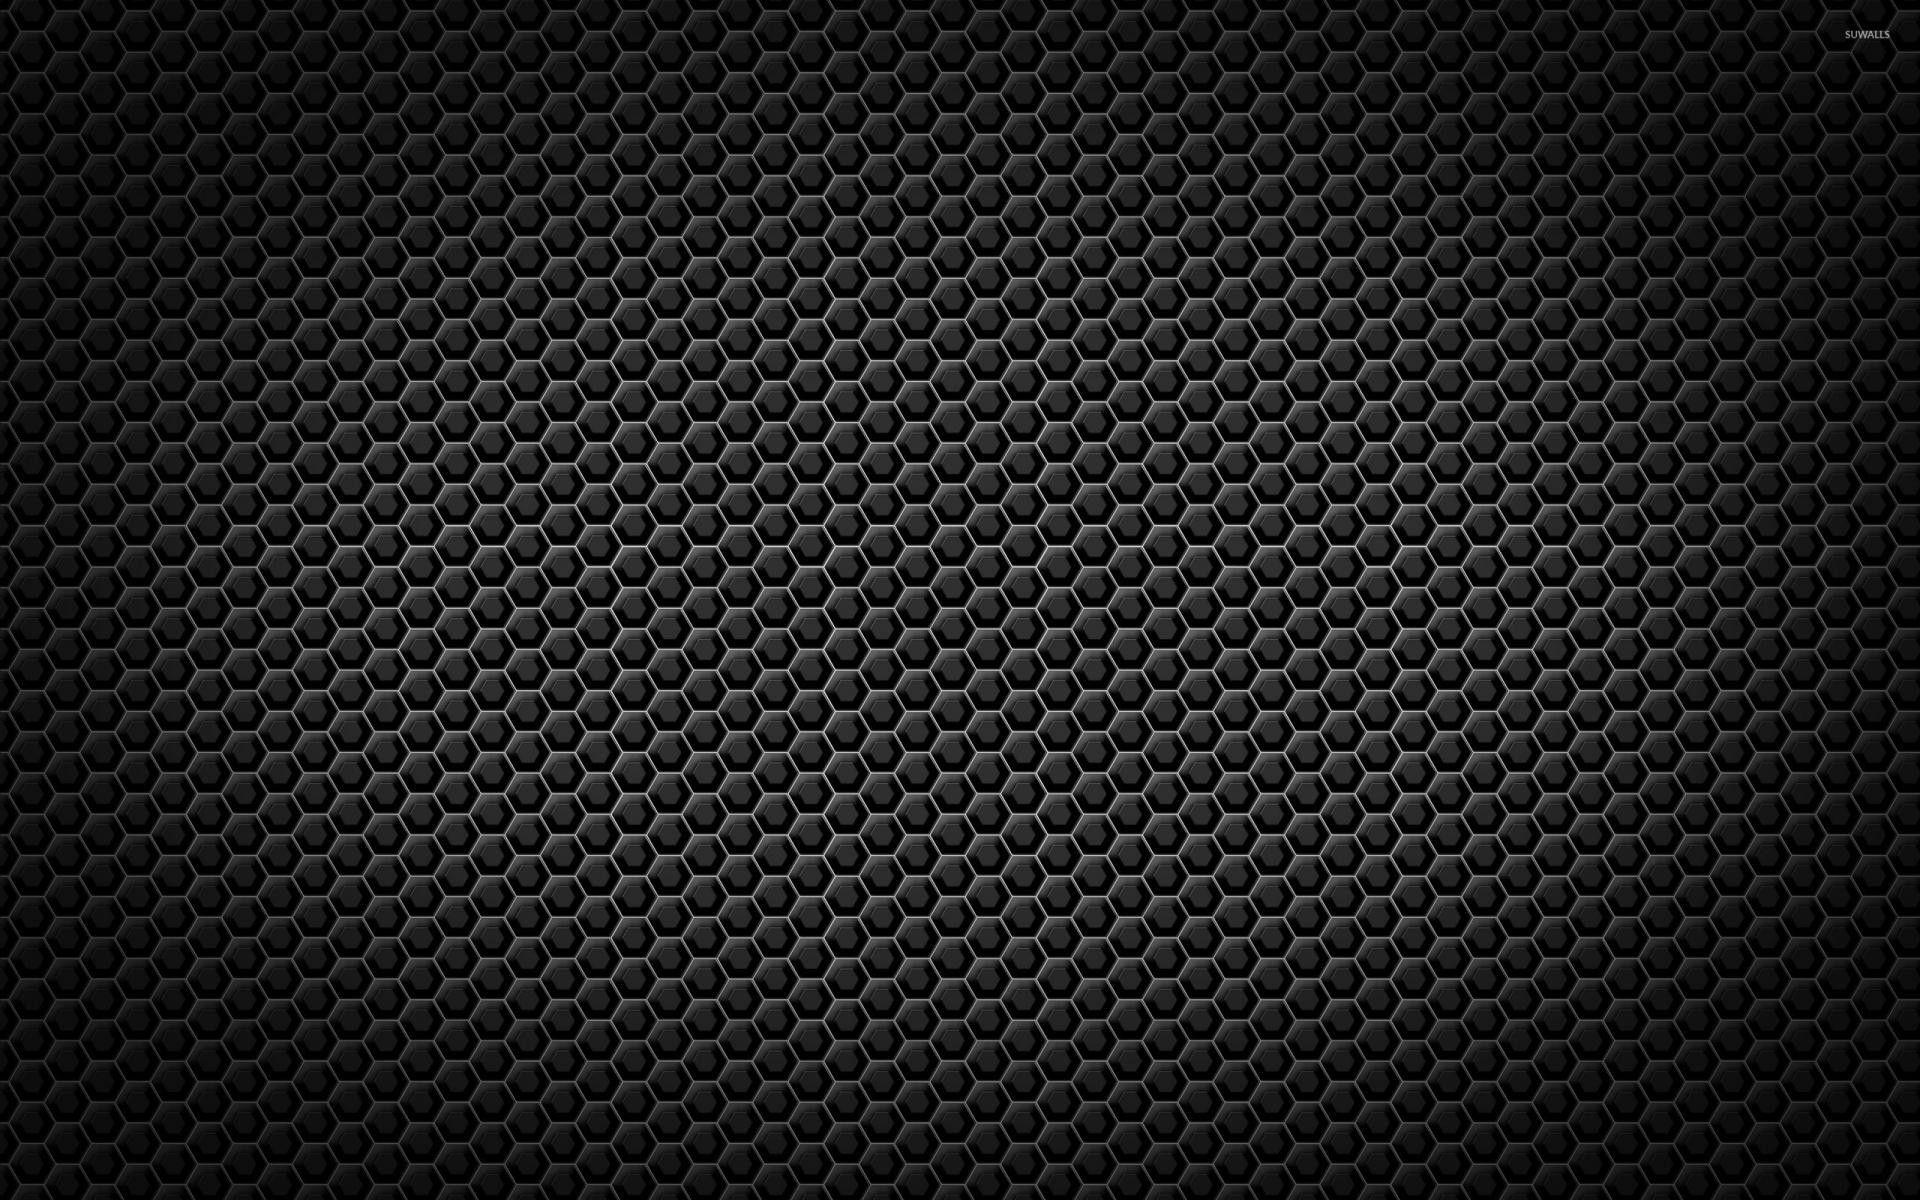 Honeycomb Wallpaper Windows 8 (72+ images)